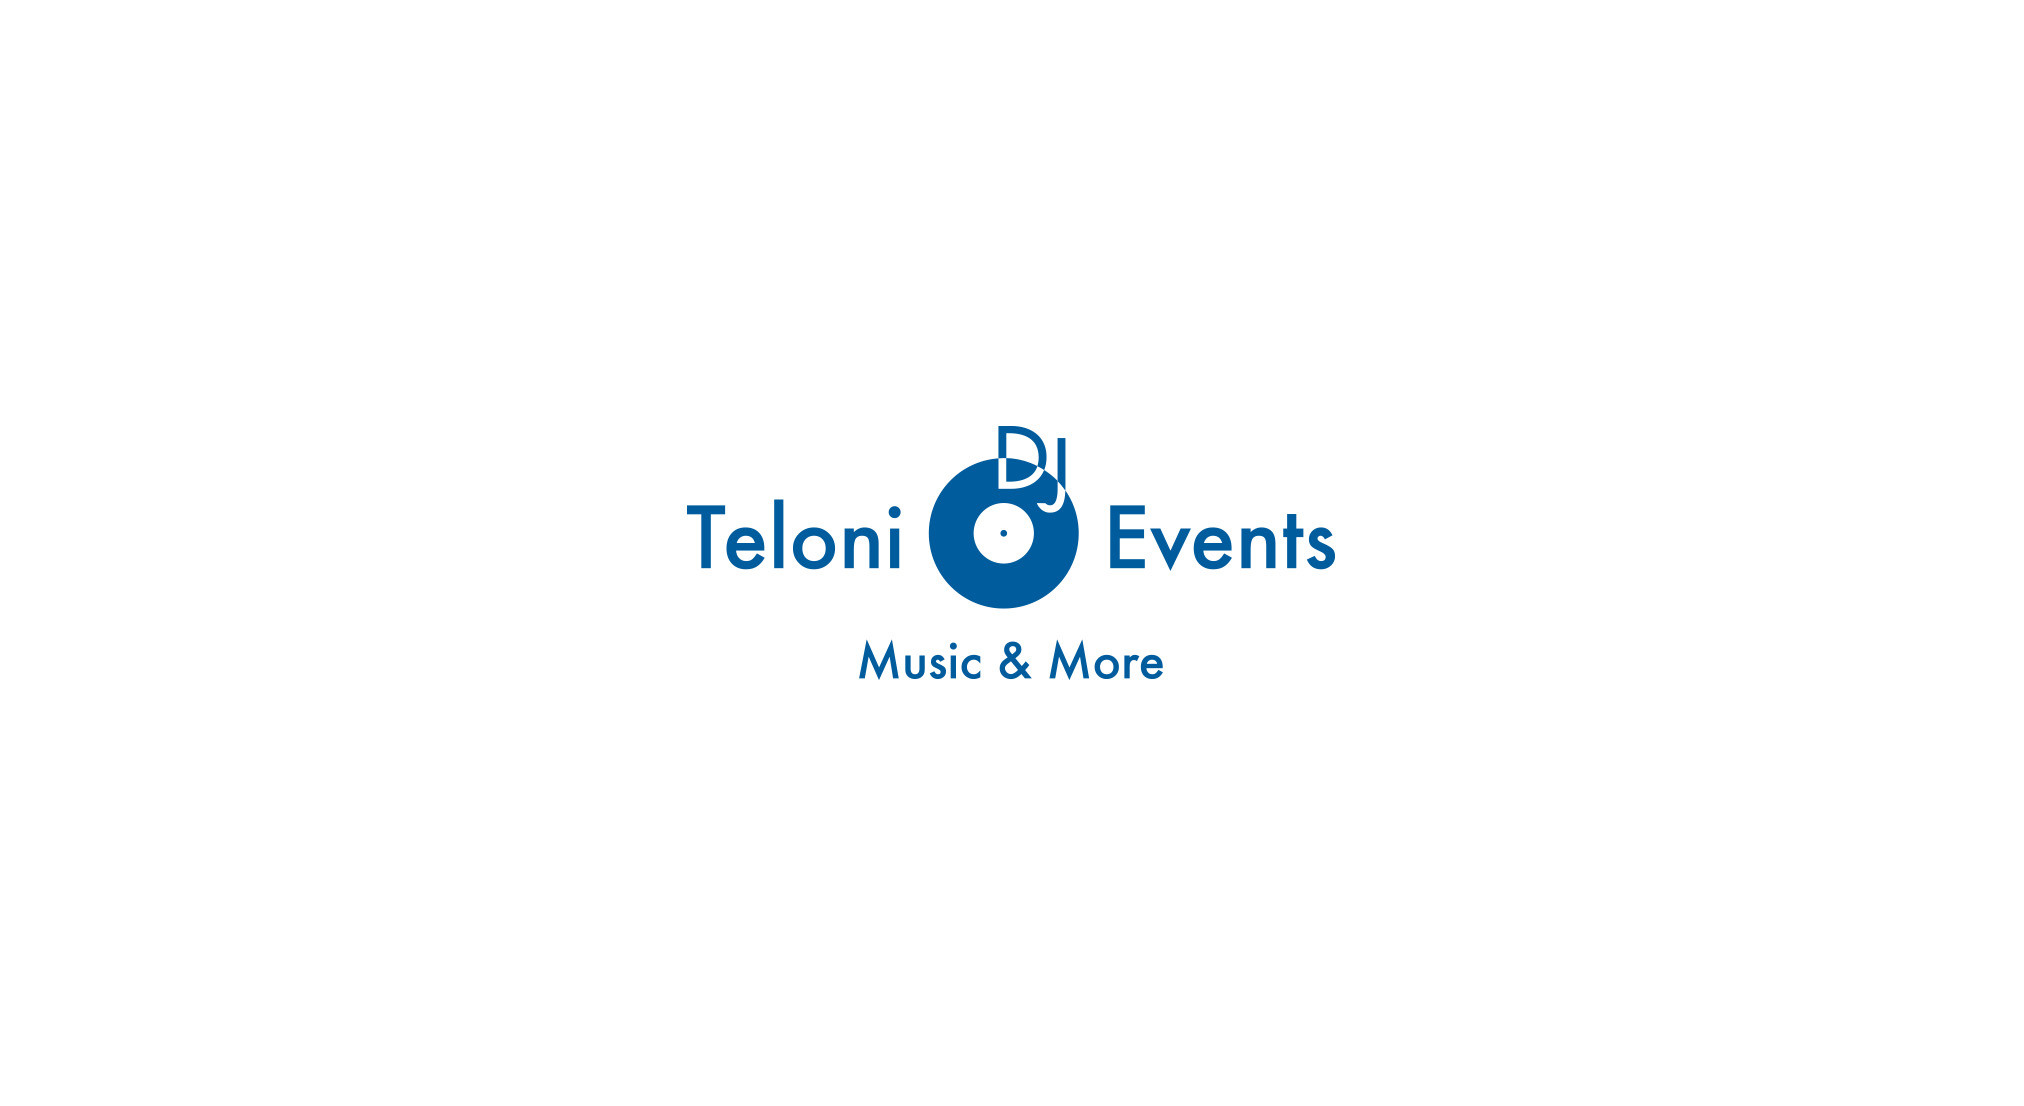 Teloni DJ Events Music and more